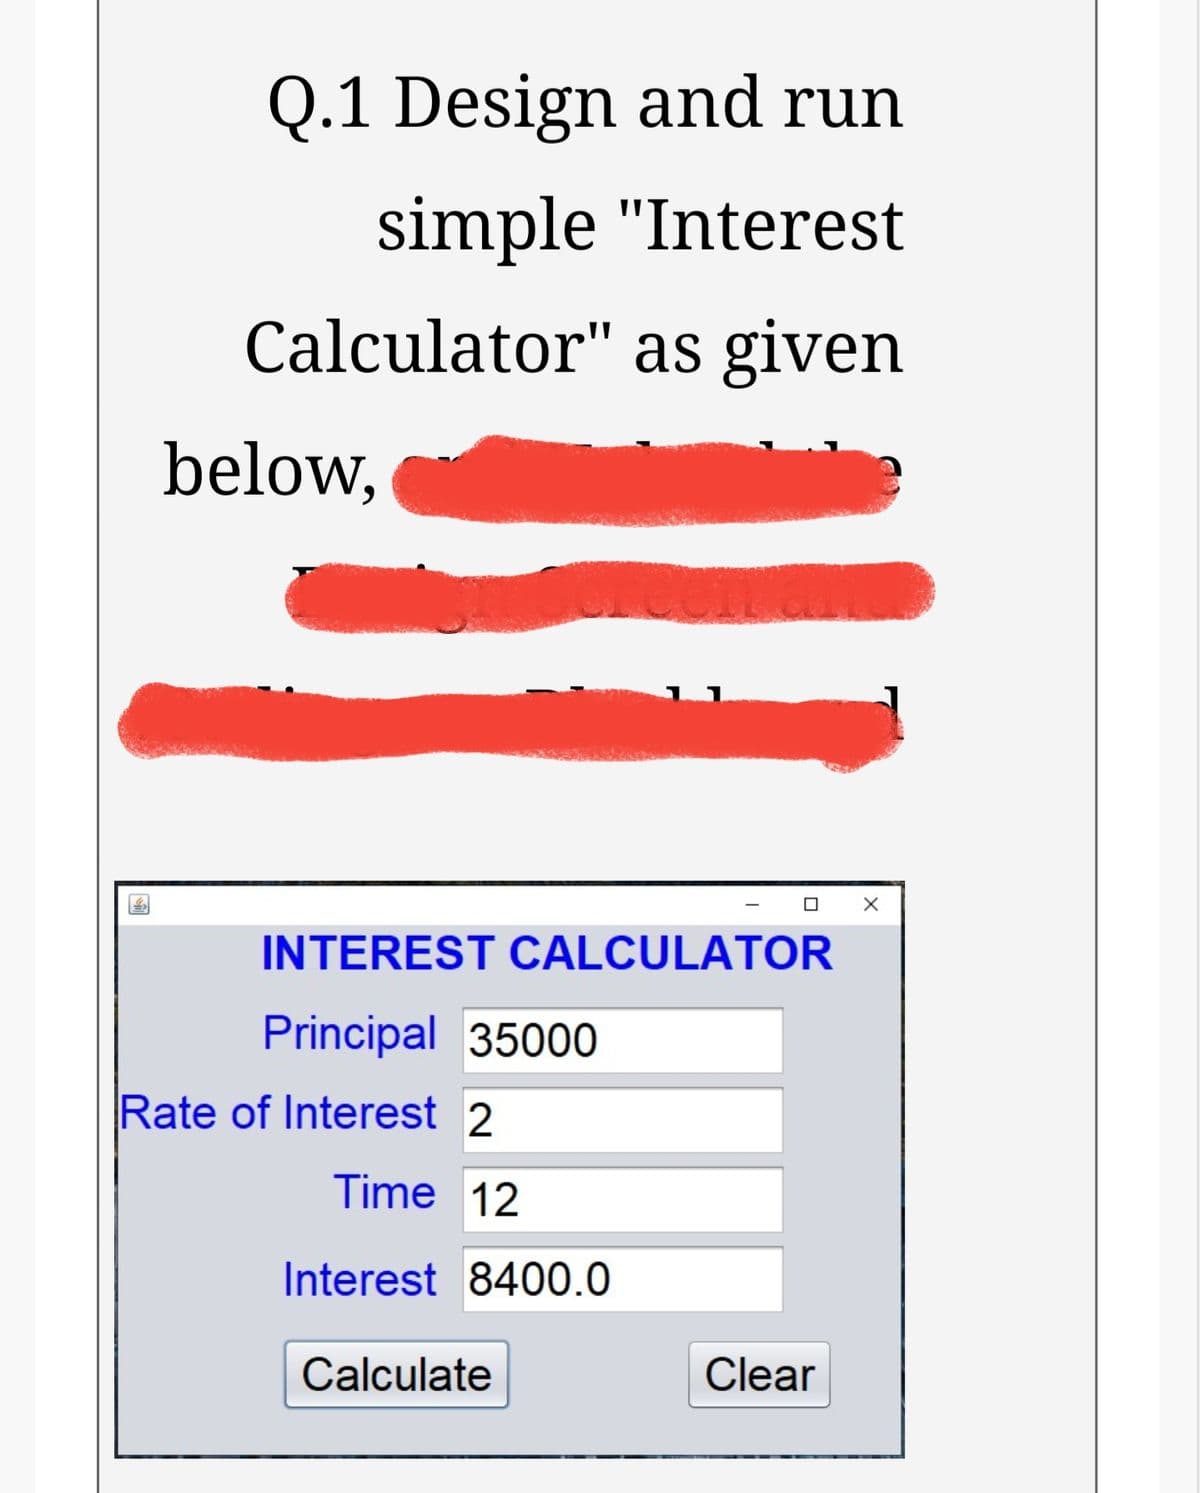 Q.1 Design and run
simple "Interest
Calculator" as given
below,
INTEREST CALCULATOR
Principal 35000
Rate of Interest 2
Time 12
Interest 8400.0
Calculate
Clear
